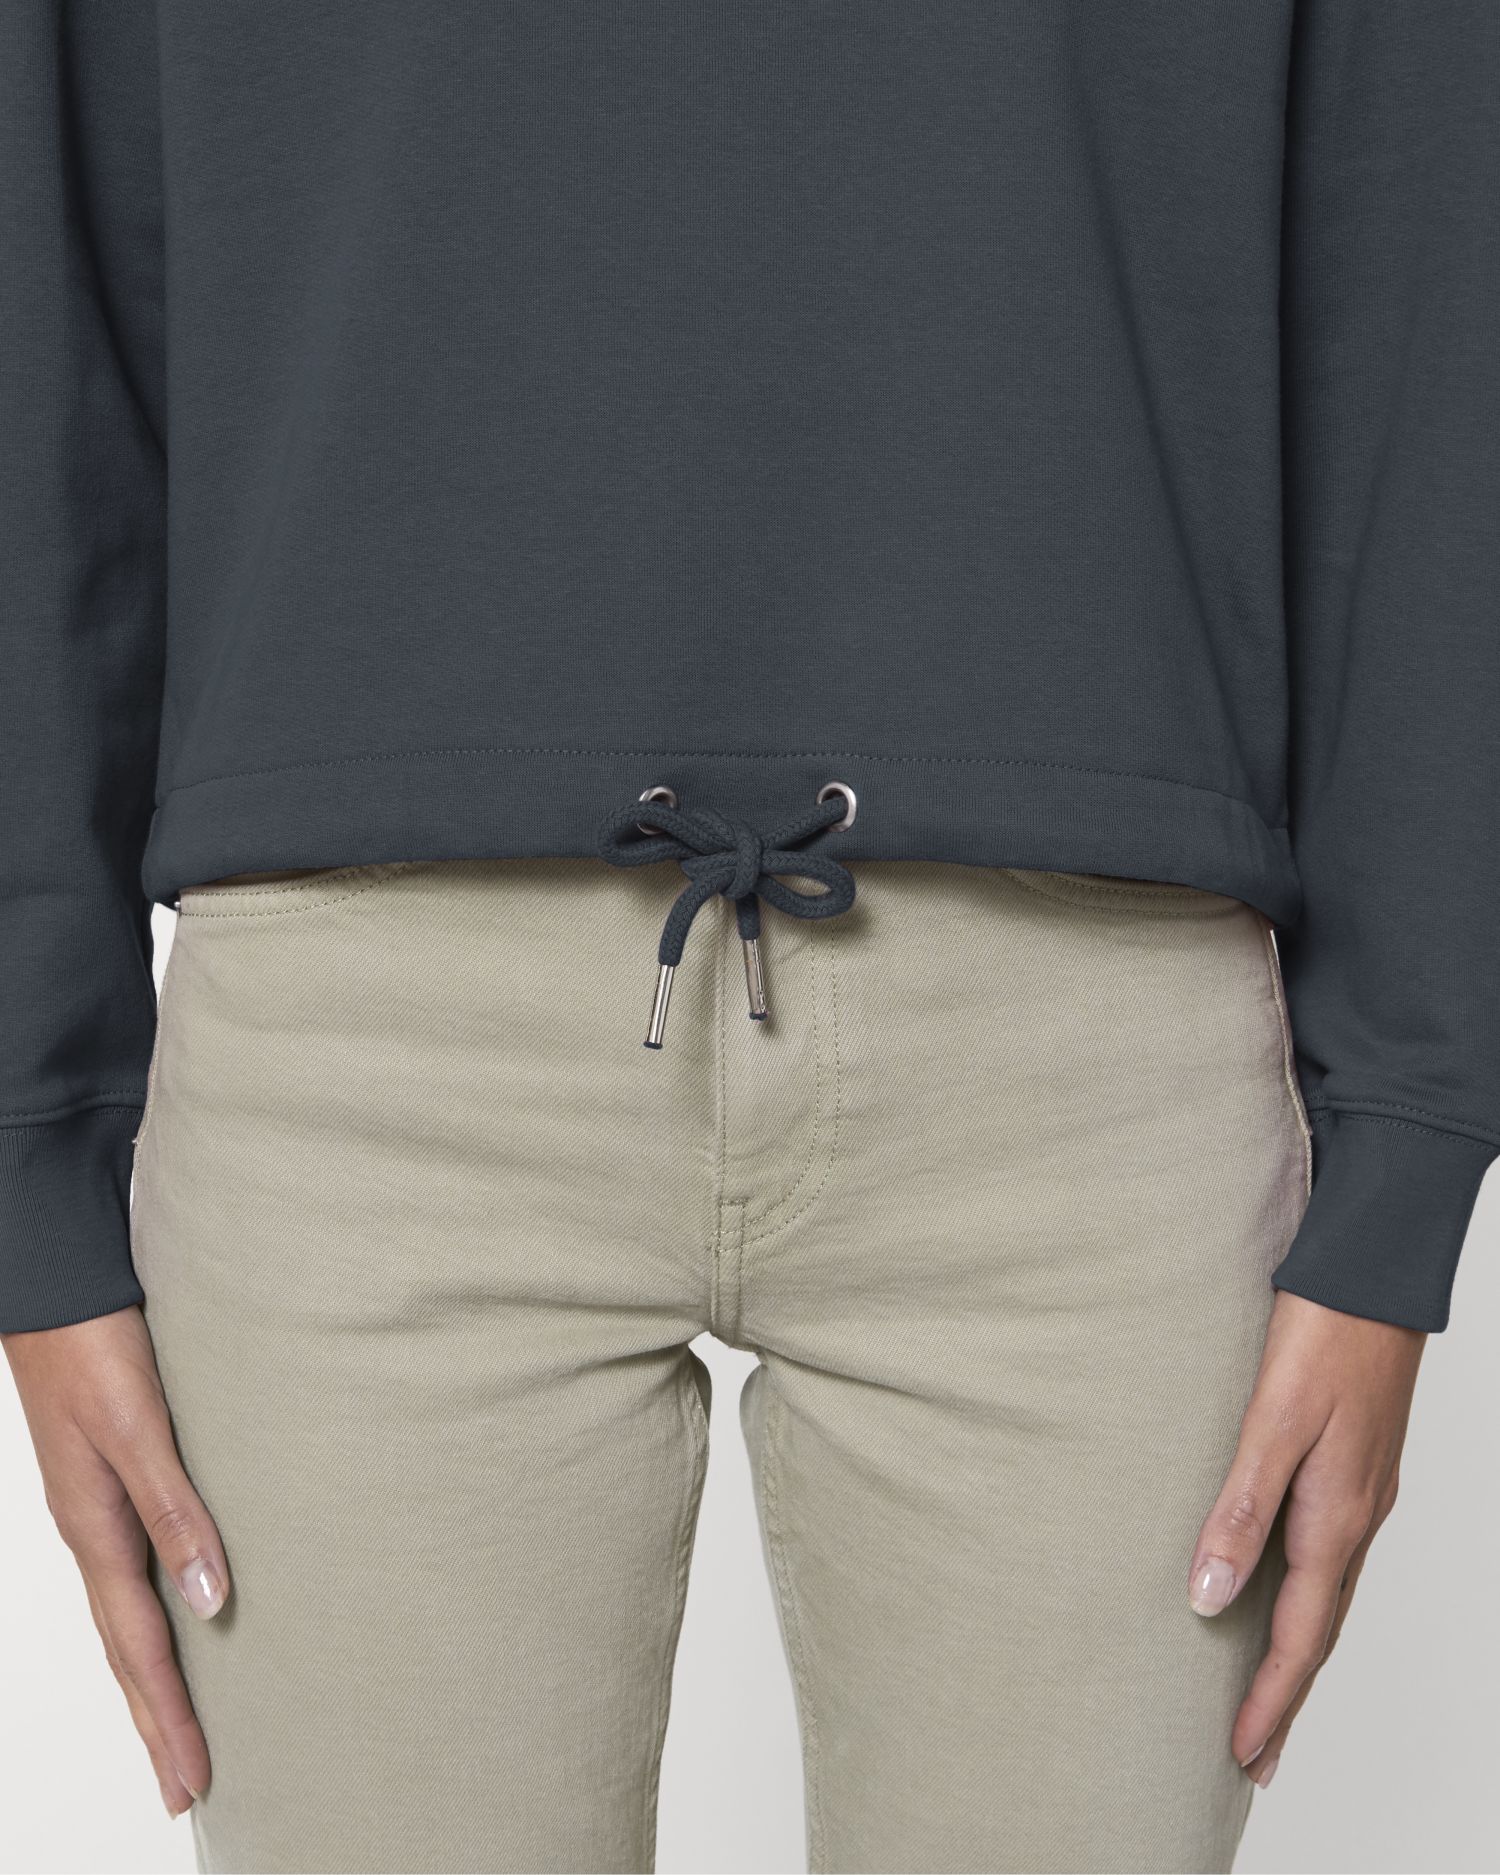 Hoodie sweatshirts Stella Bower in Farbe India Ink Grey